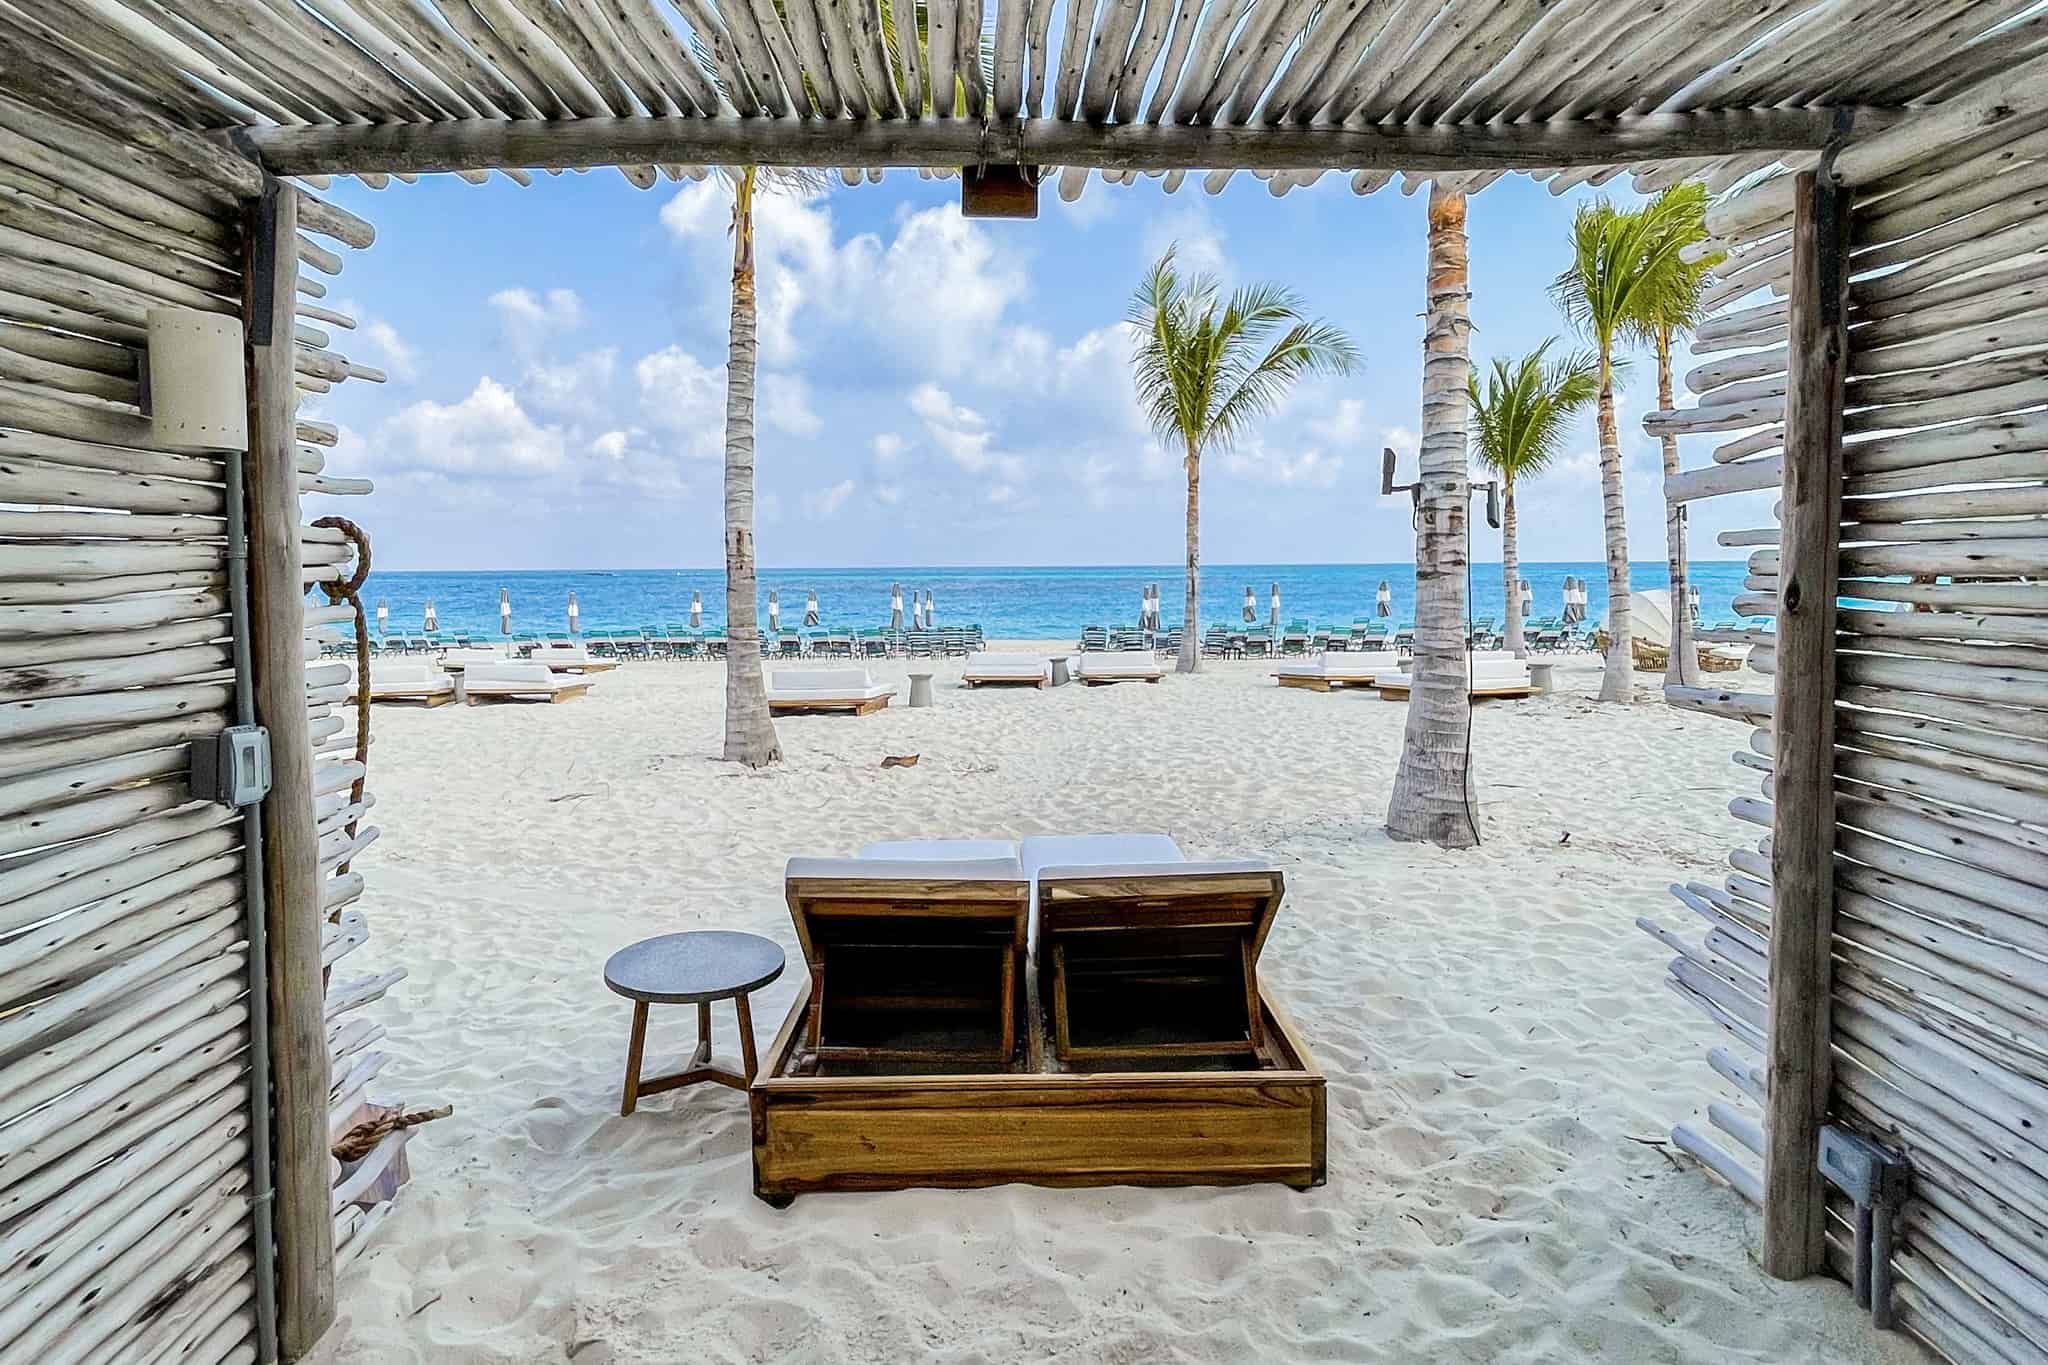 Virgin Voyages Bimini Beach Club with white sand cabana